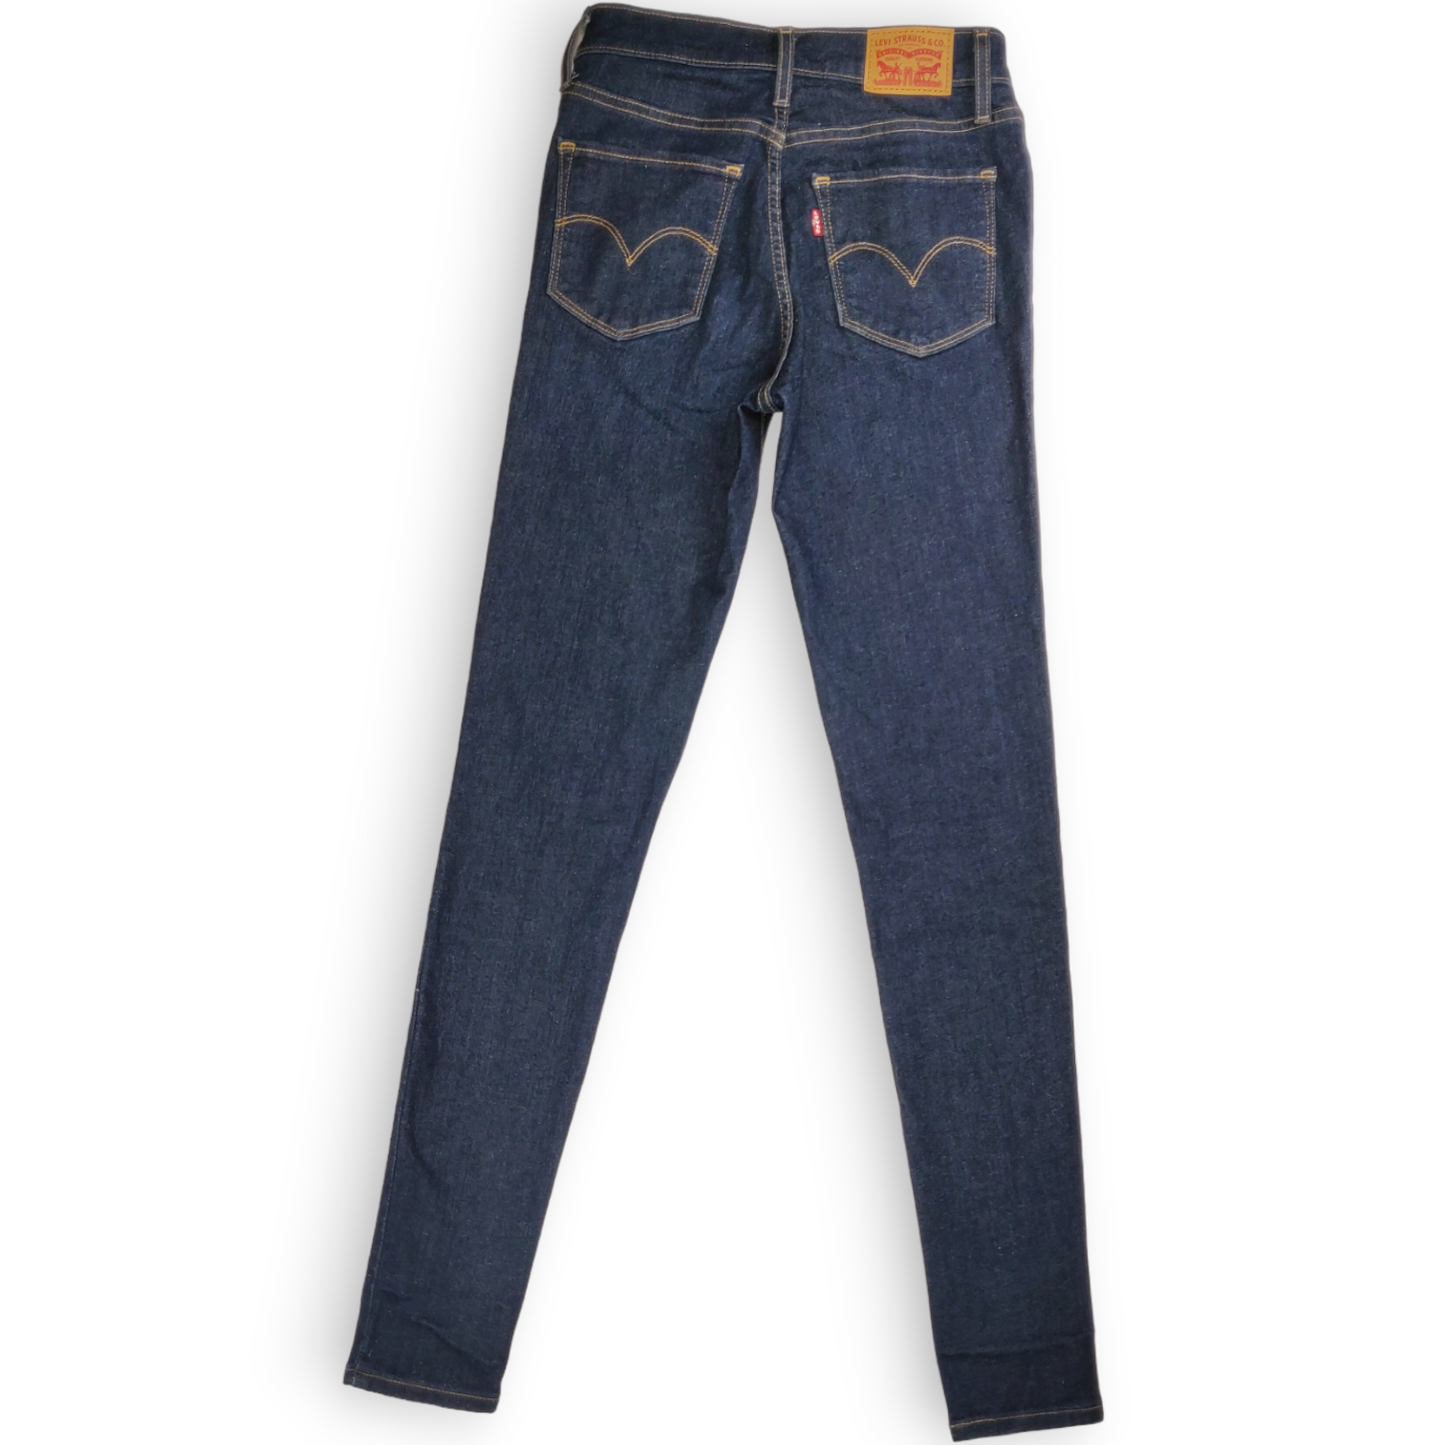 Levi's 720 Blue High Rise Super Skinny Jeans Women Size W26/L30